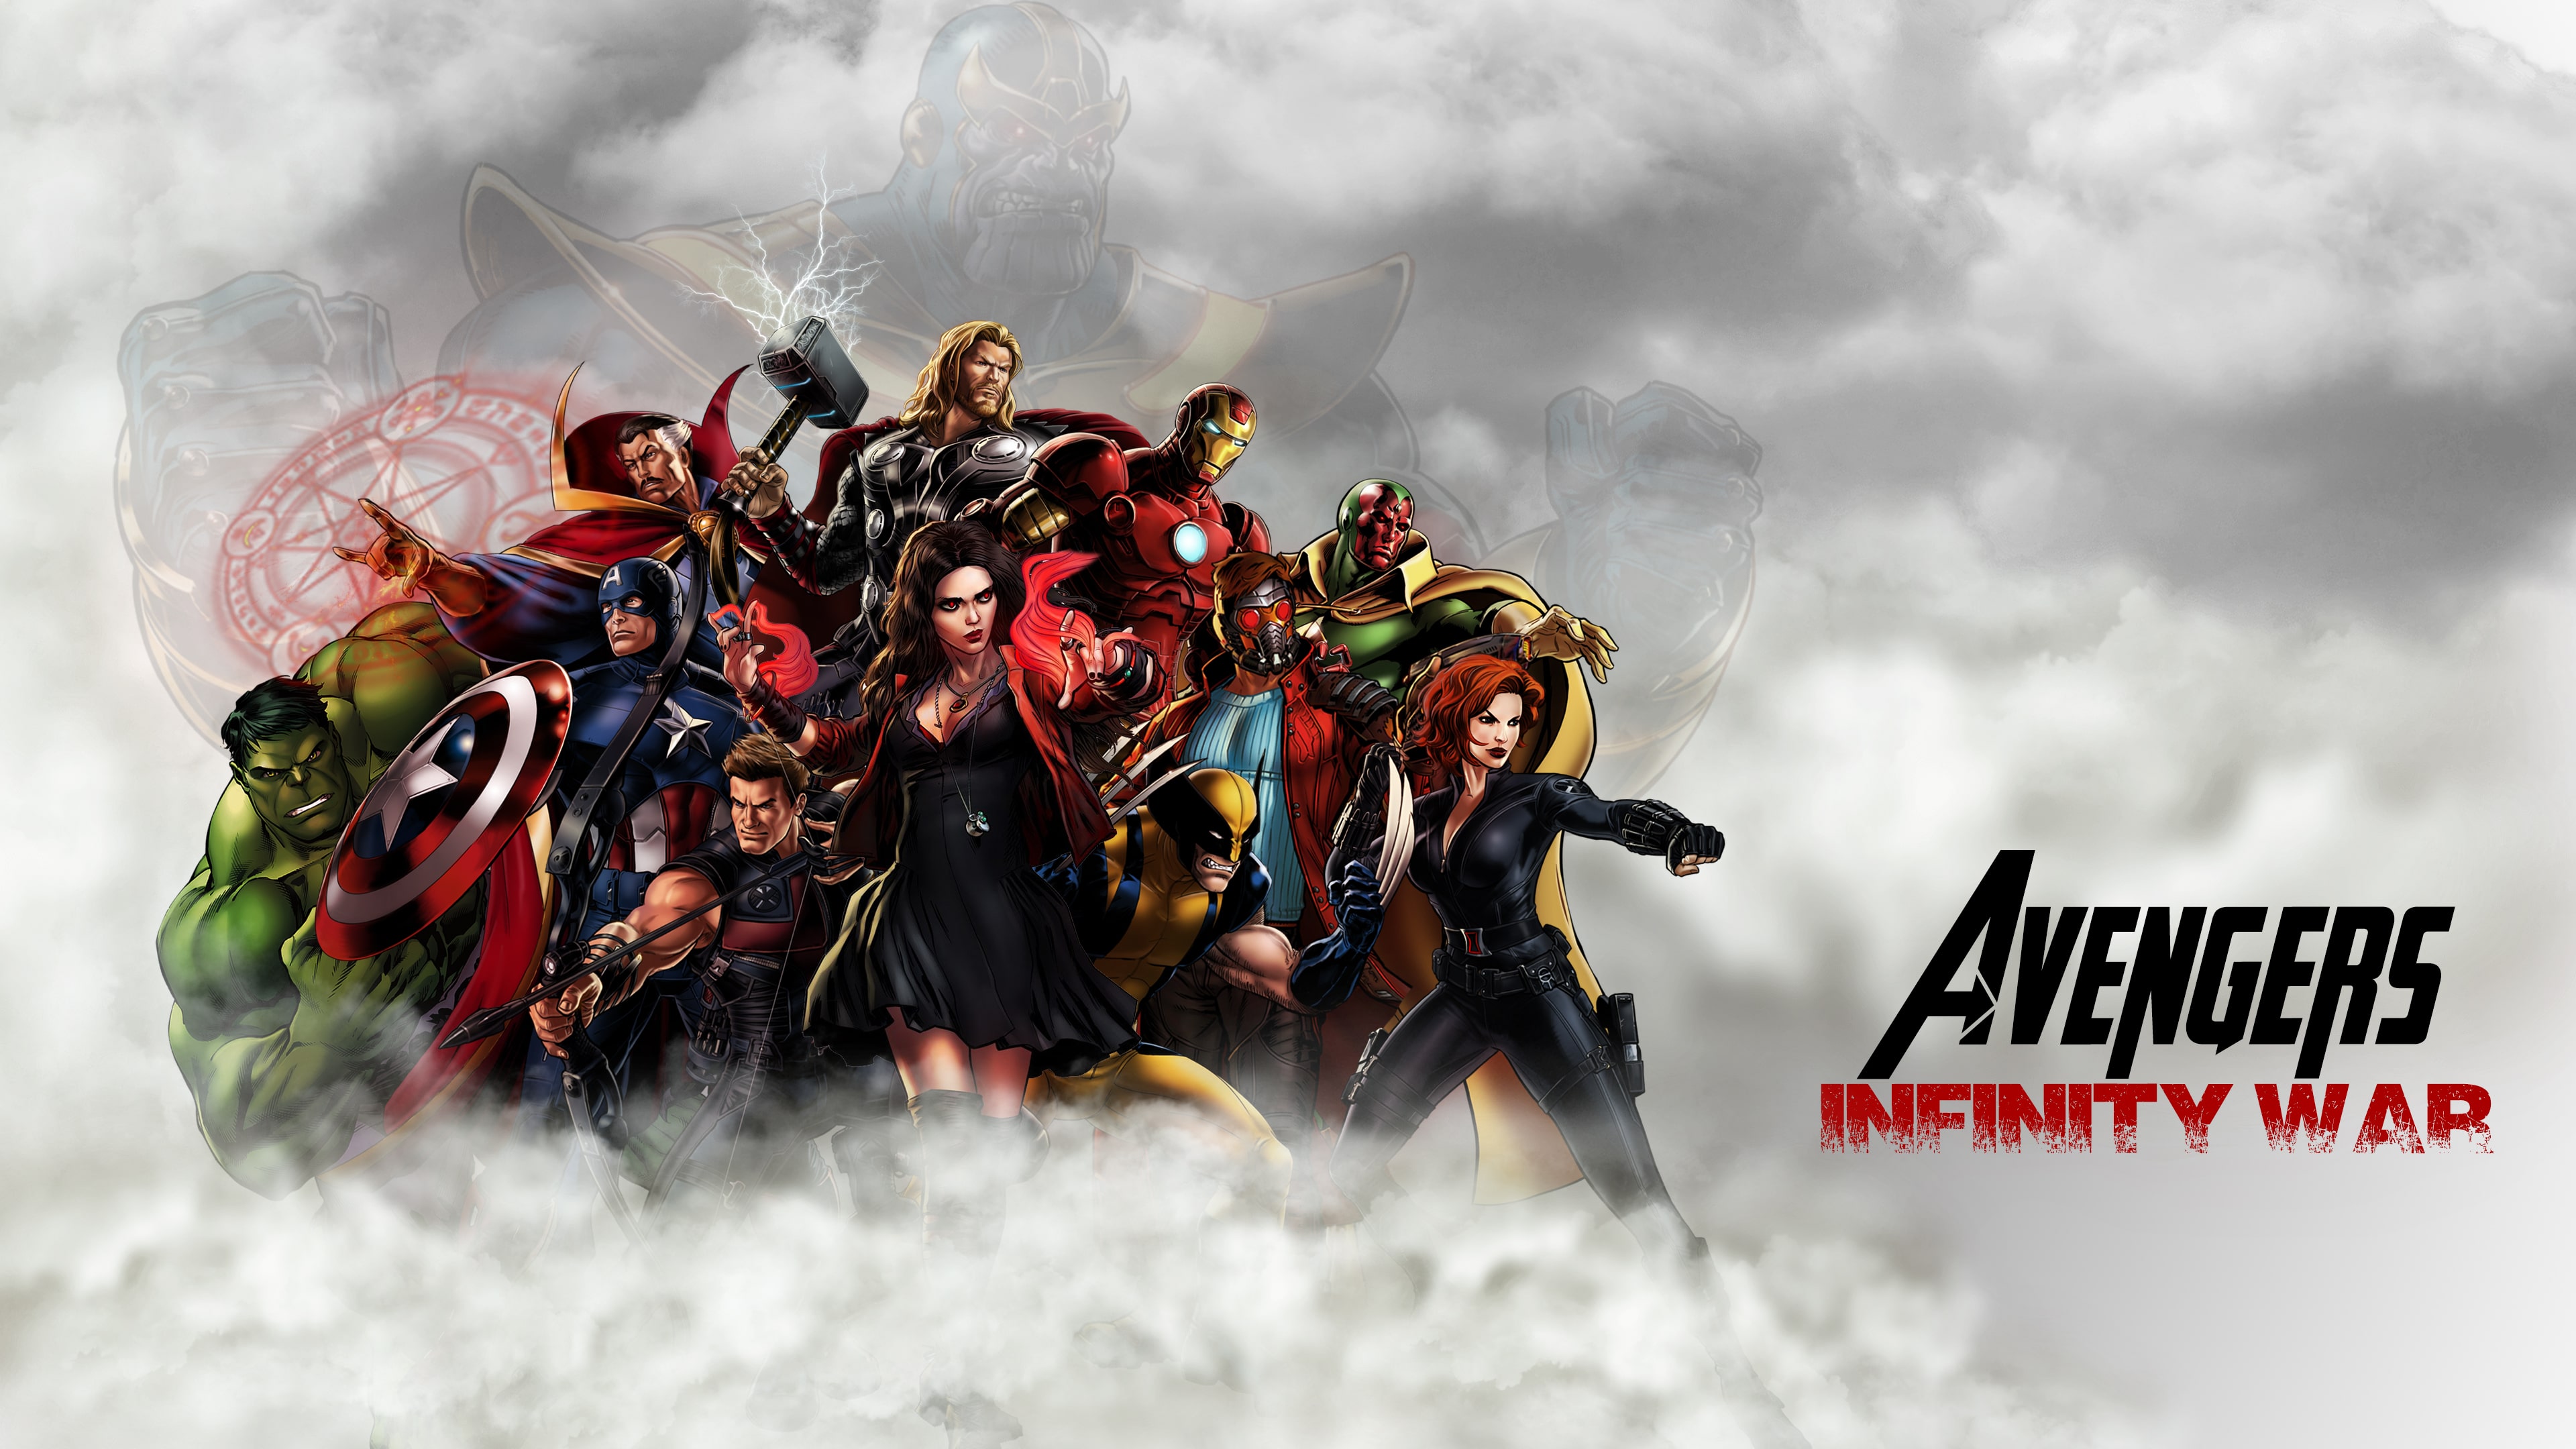 Download Avengers Infinity War Superheroes Fan Art Wallpaper | Wallpapers .com